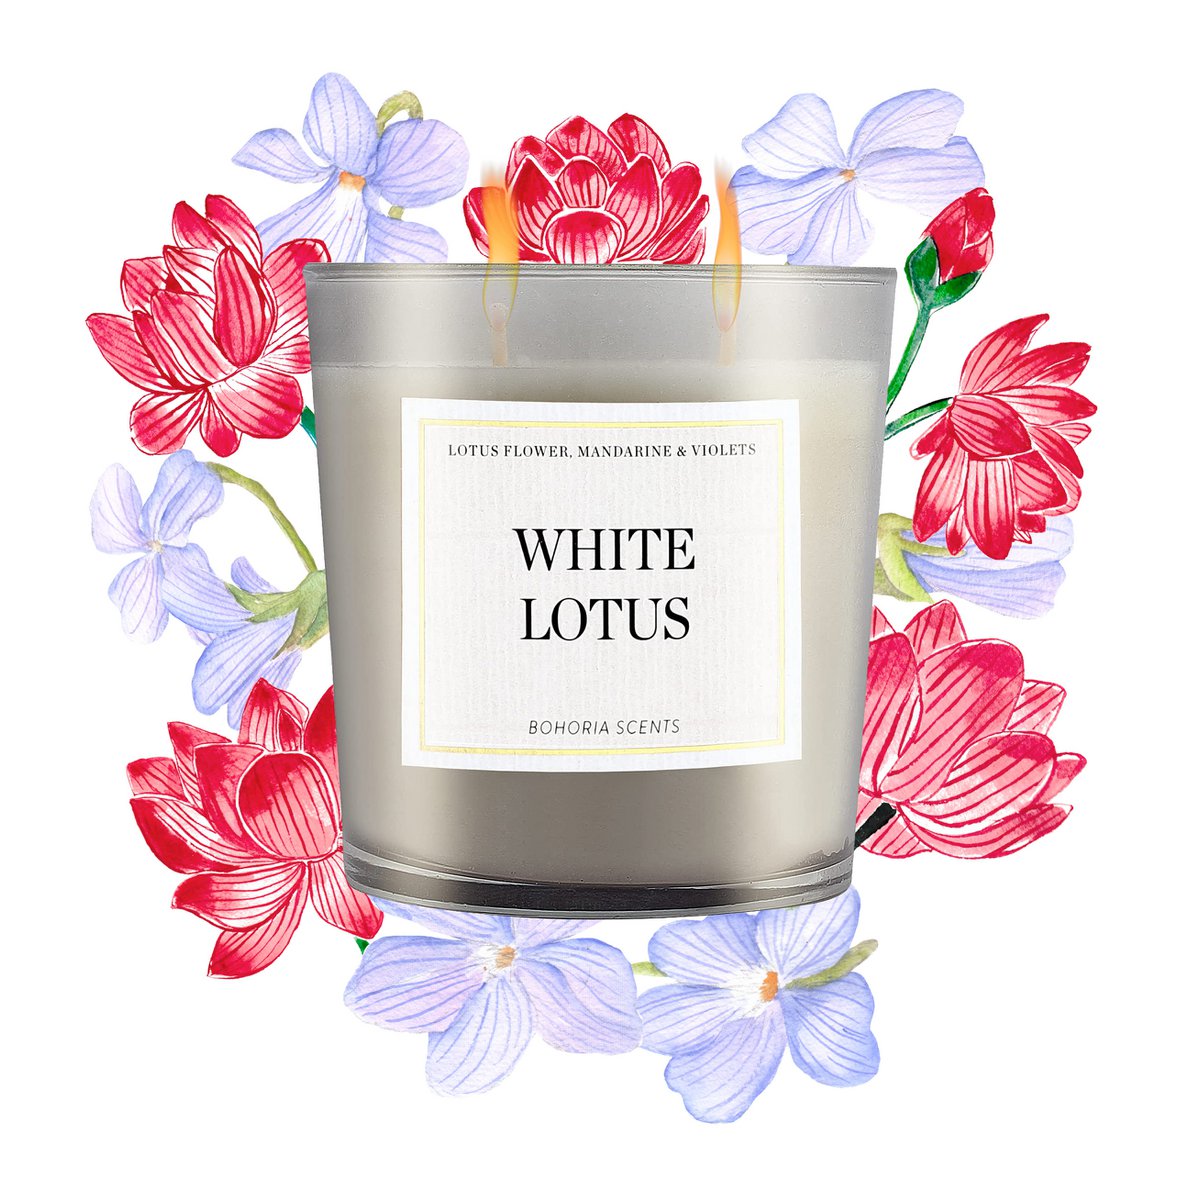 Bohoria Scented Candle White Lotus